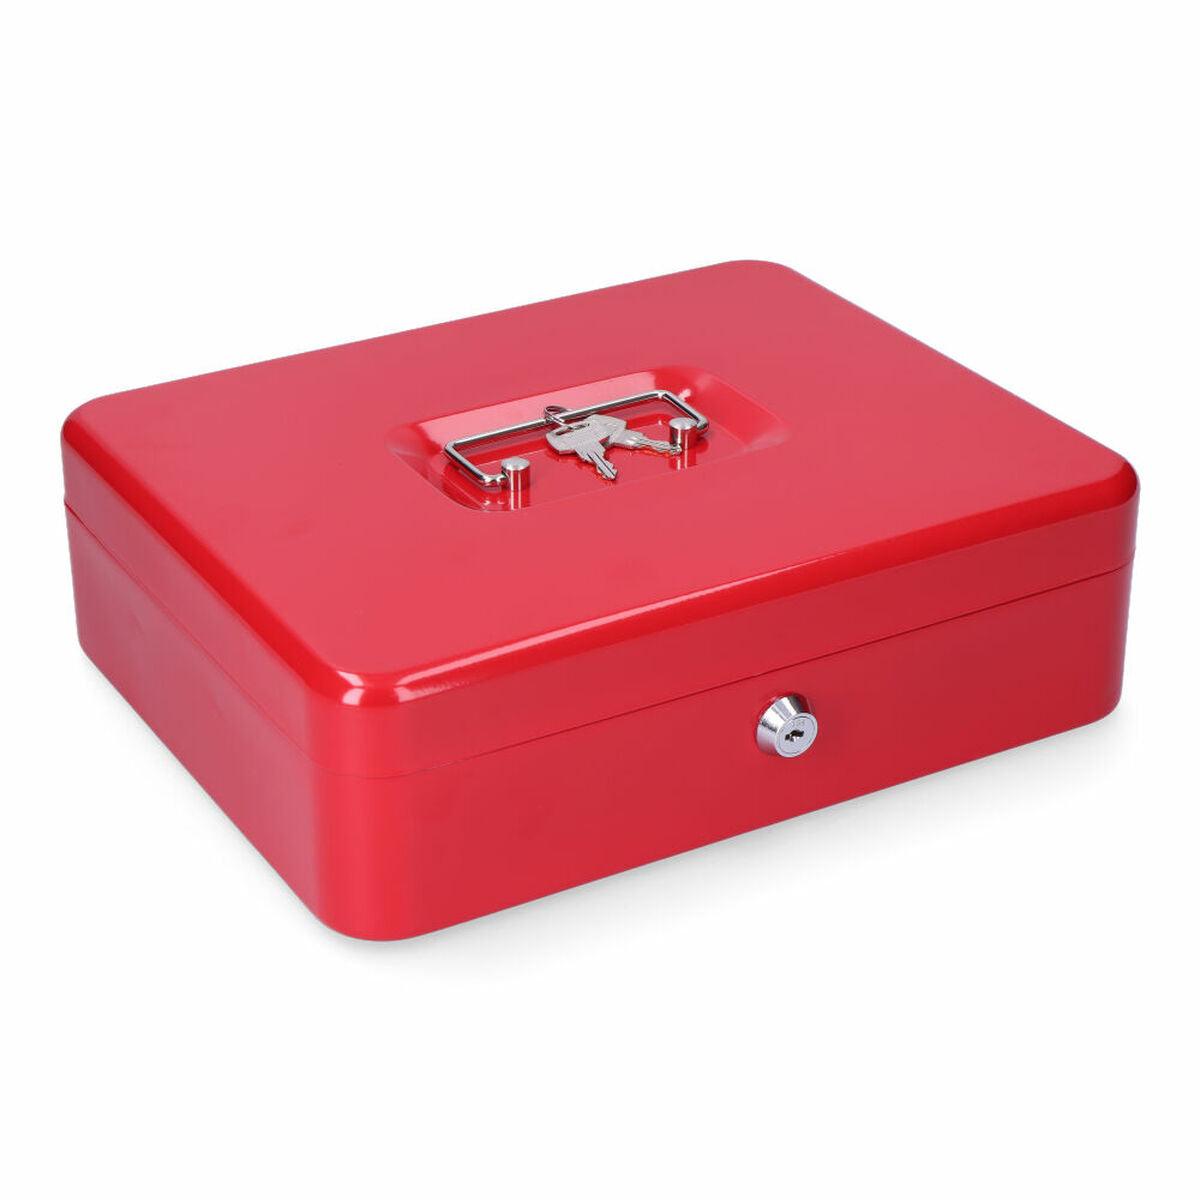 Safe-deposit box Micel CFC09 M13401 Red Steel 30 x 24 x 9 cm - Sterilamo